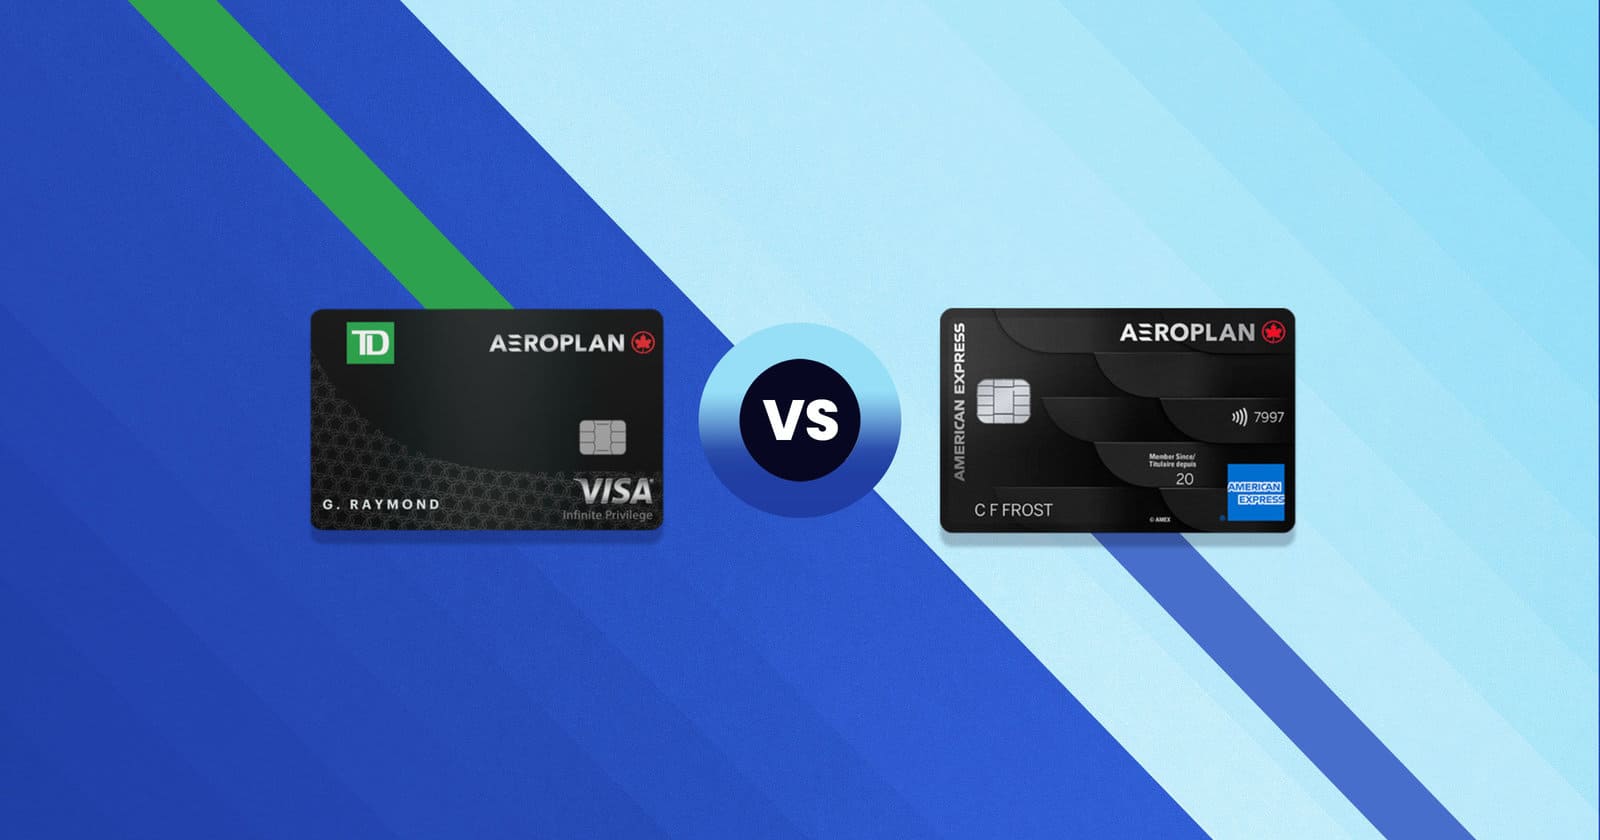 American Express Aeroplan Reserve Card vs TD Aeroplan Visa Infinite Privilege Card